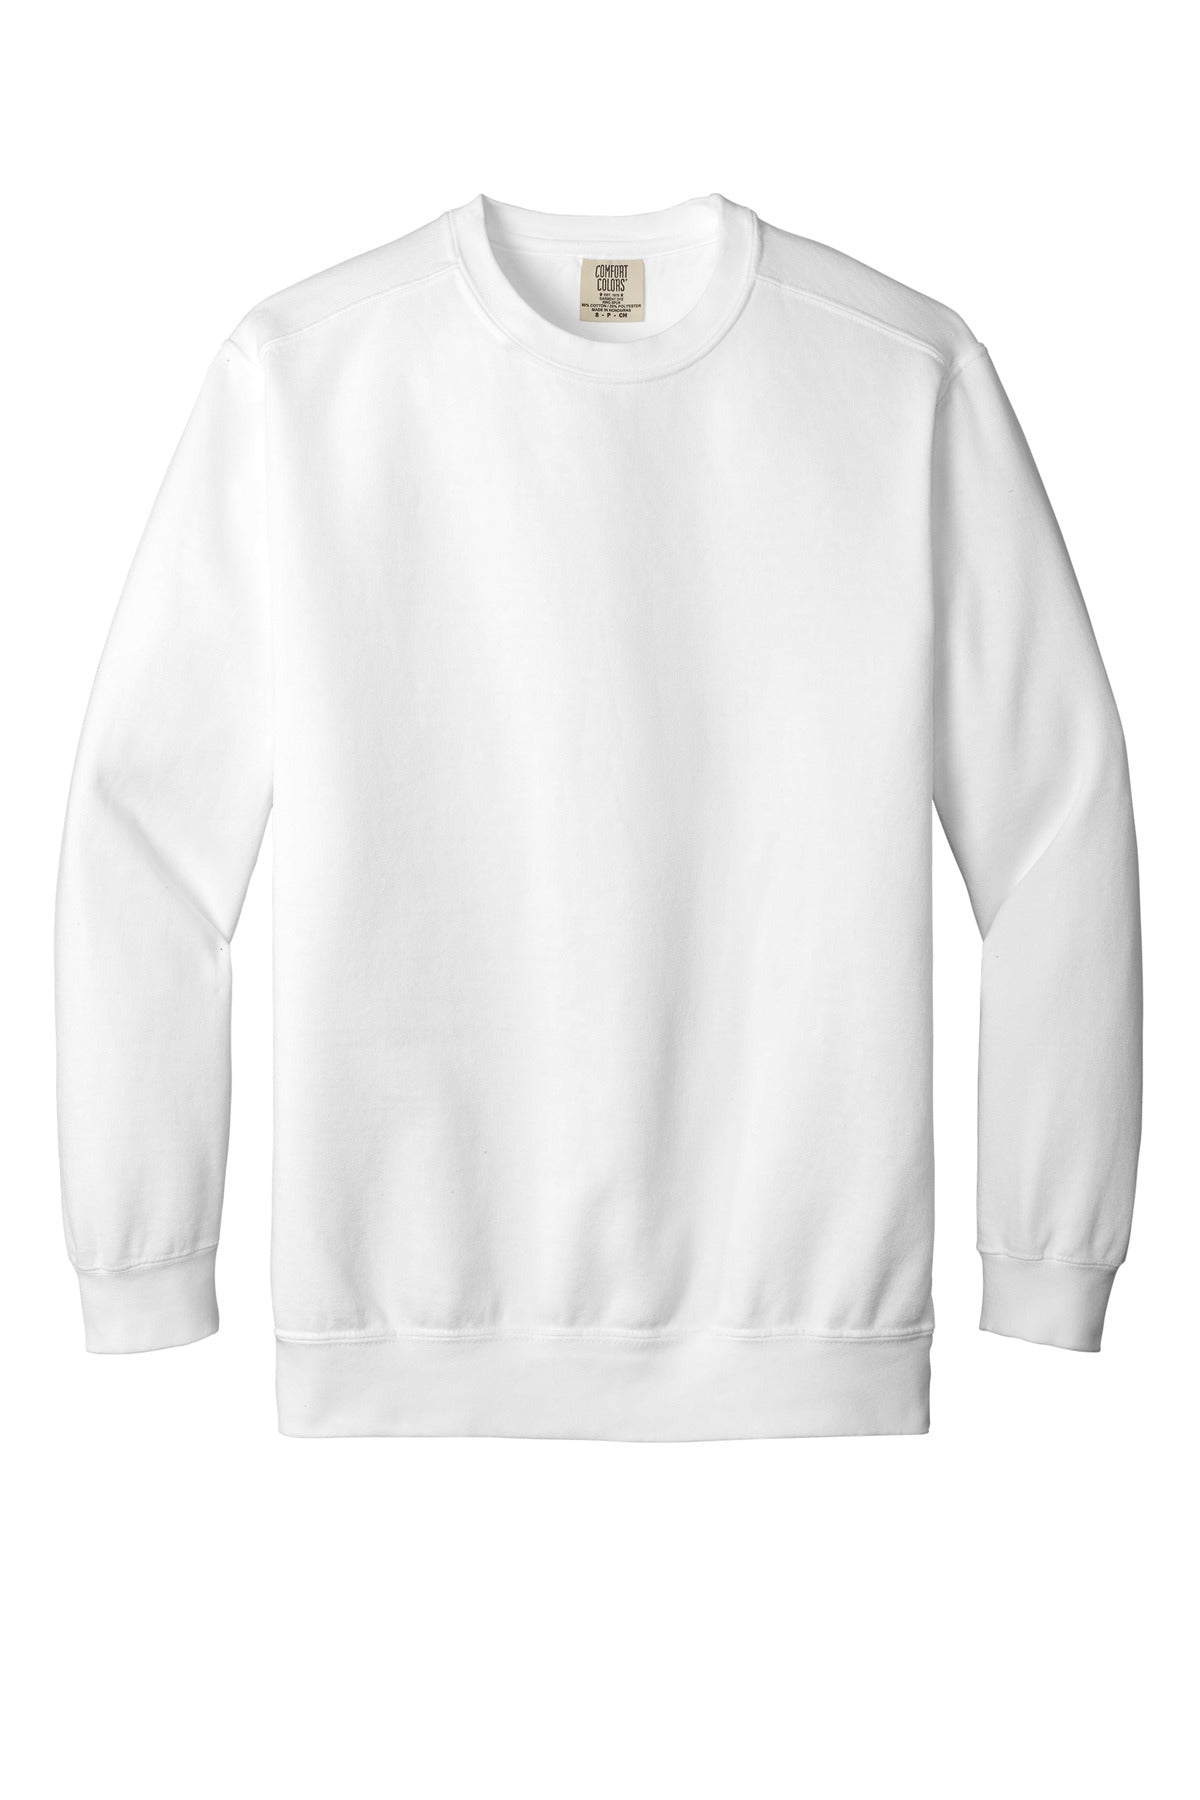 COMFORT COLORS ® Ring Spun Crewneck Sweatshirt